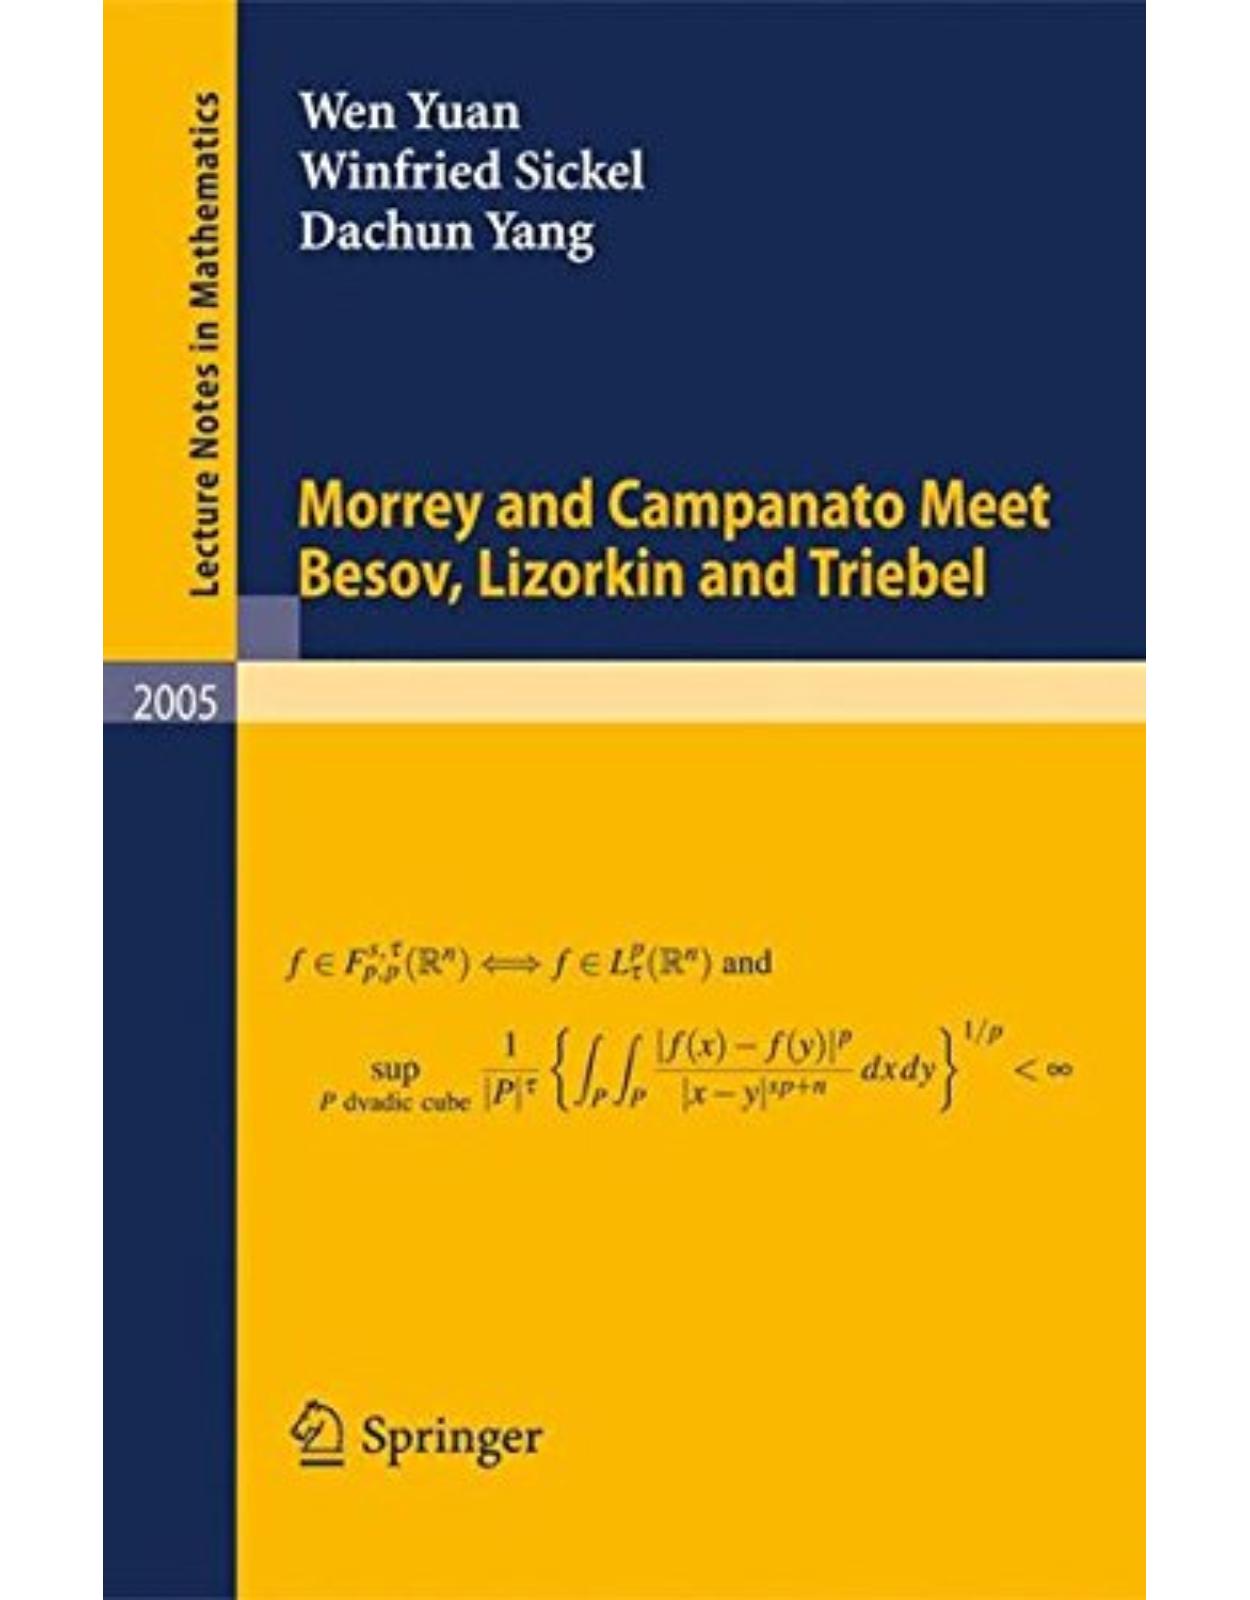 Morrey and Campanato Meet Besov, Lizorkin and Triebel